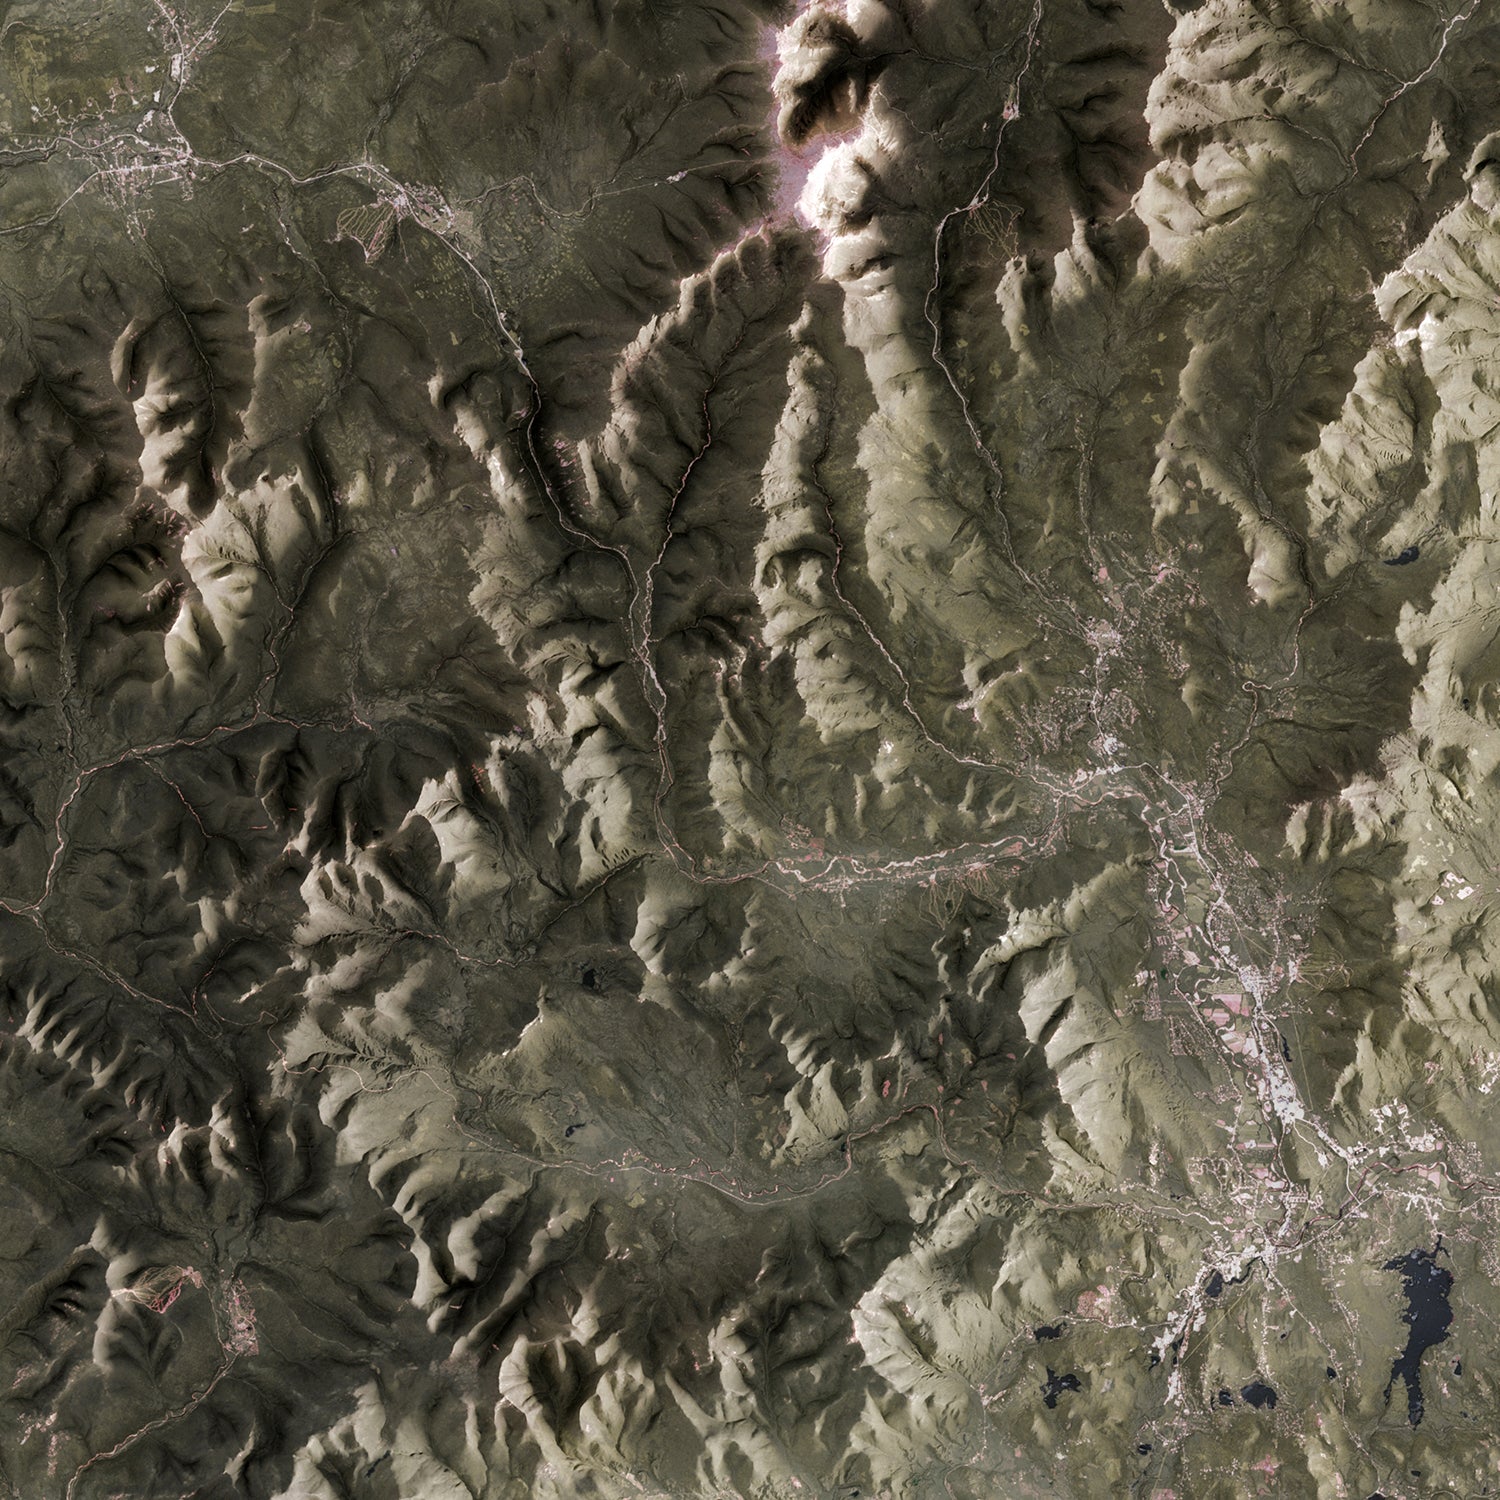 White Mountains, NH - Satellite Imagery